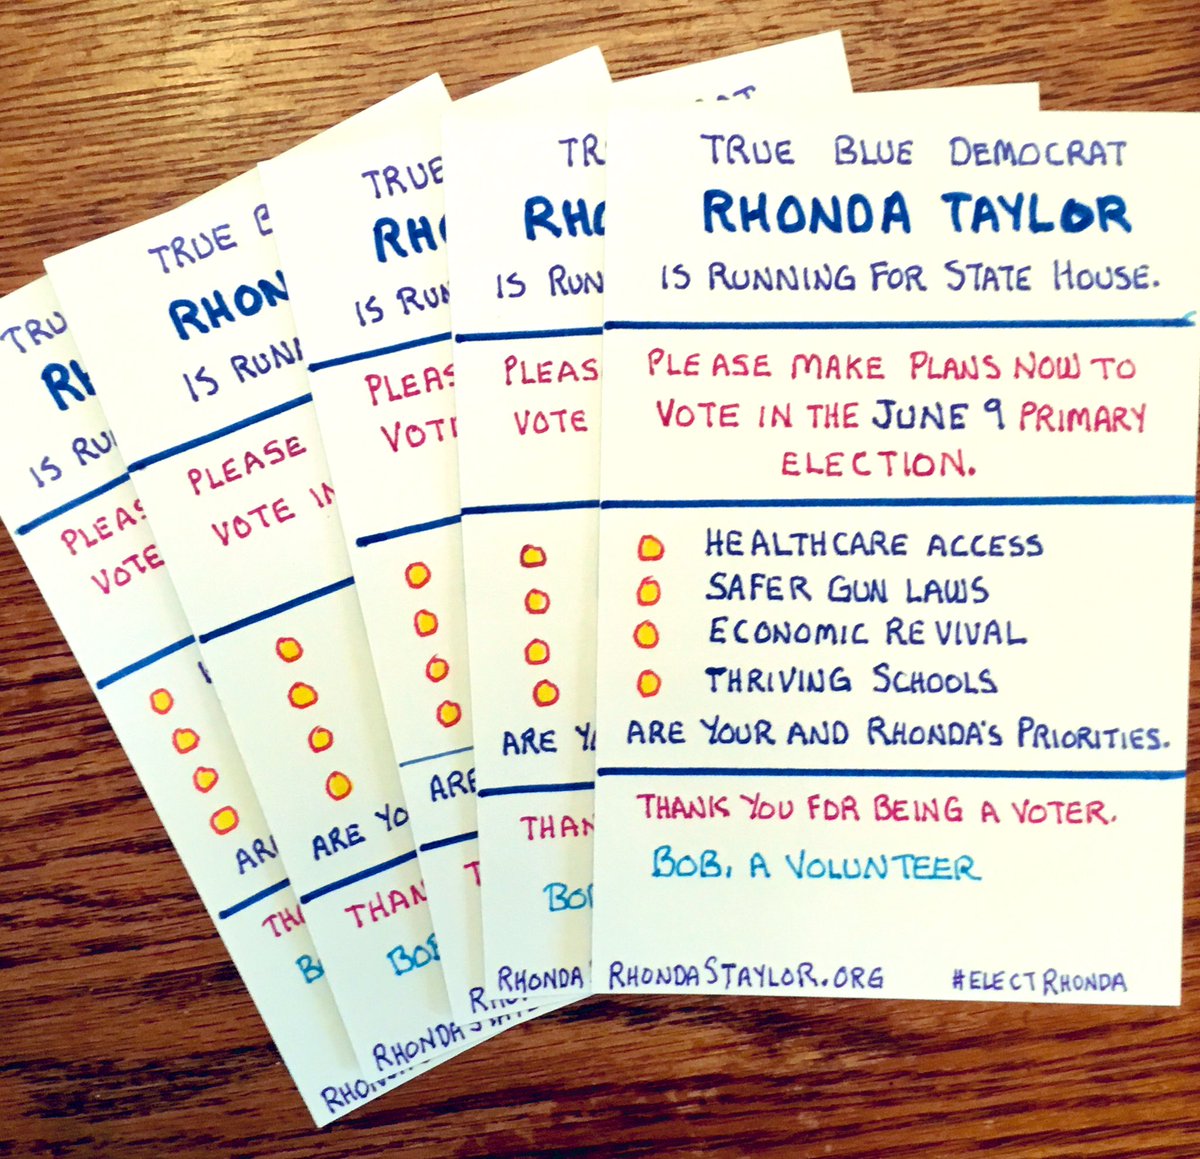 Five PostcardsToVoters in Georgia in support of True Blue Democrat Rhonda Taylor for State House.

#ElectRhonda
#VoteBlue2020
#VoteBlueToEndThisNightmare
#StayHomeSaveLives
#WashYourHands